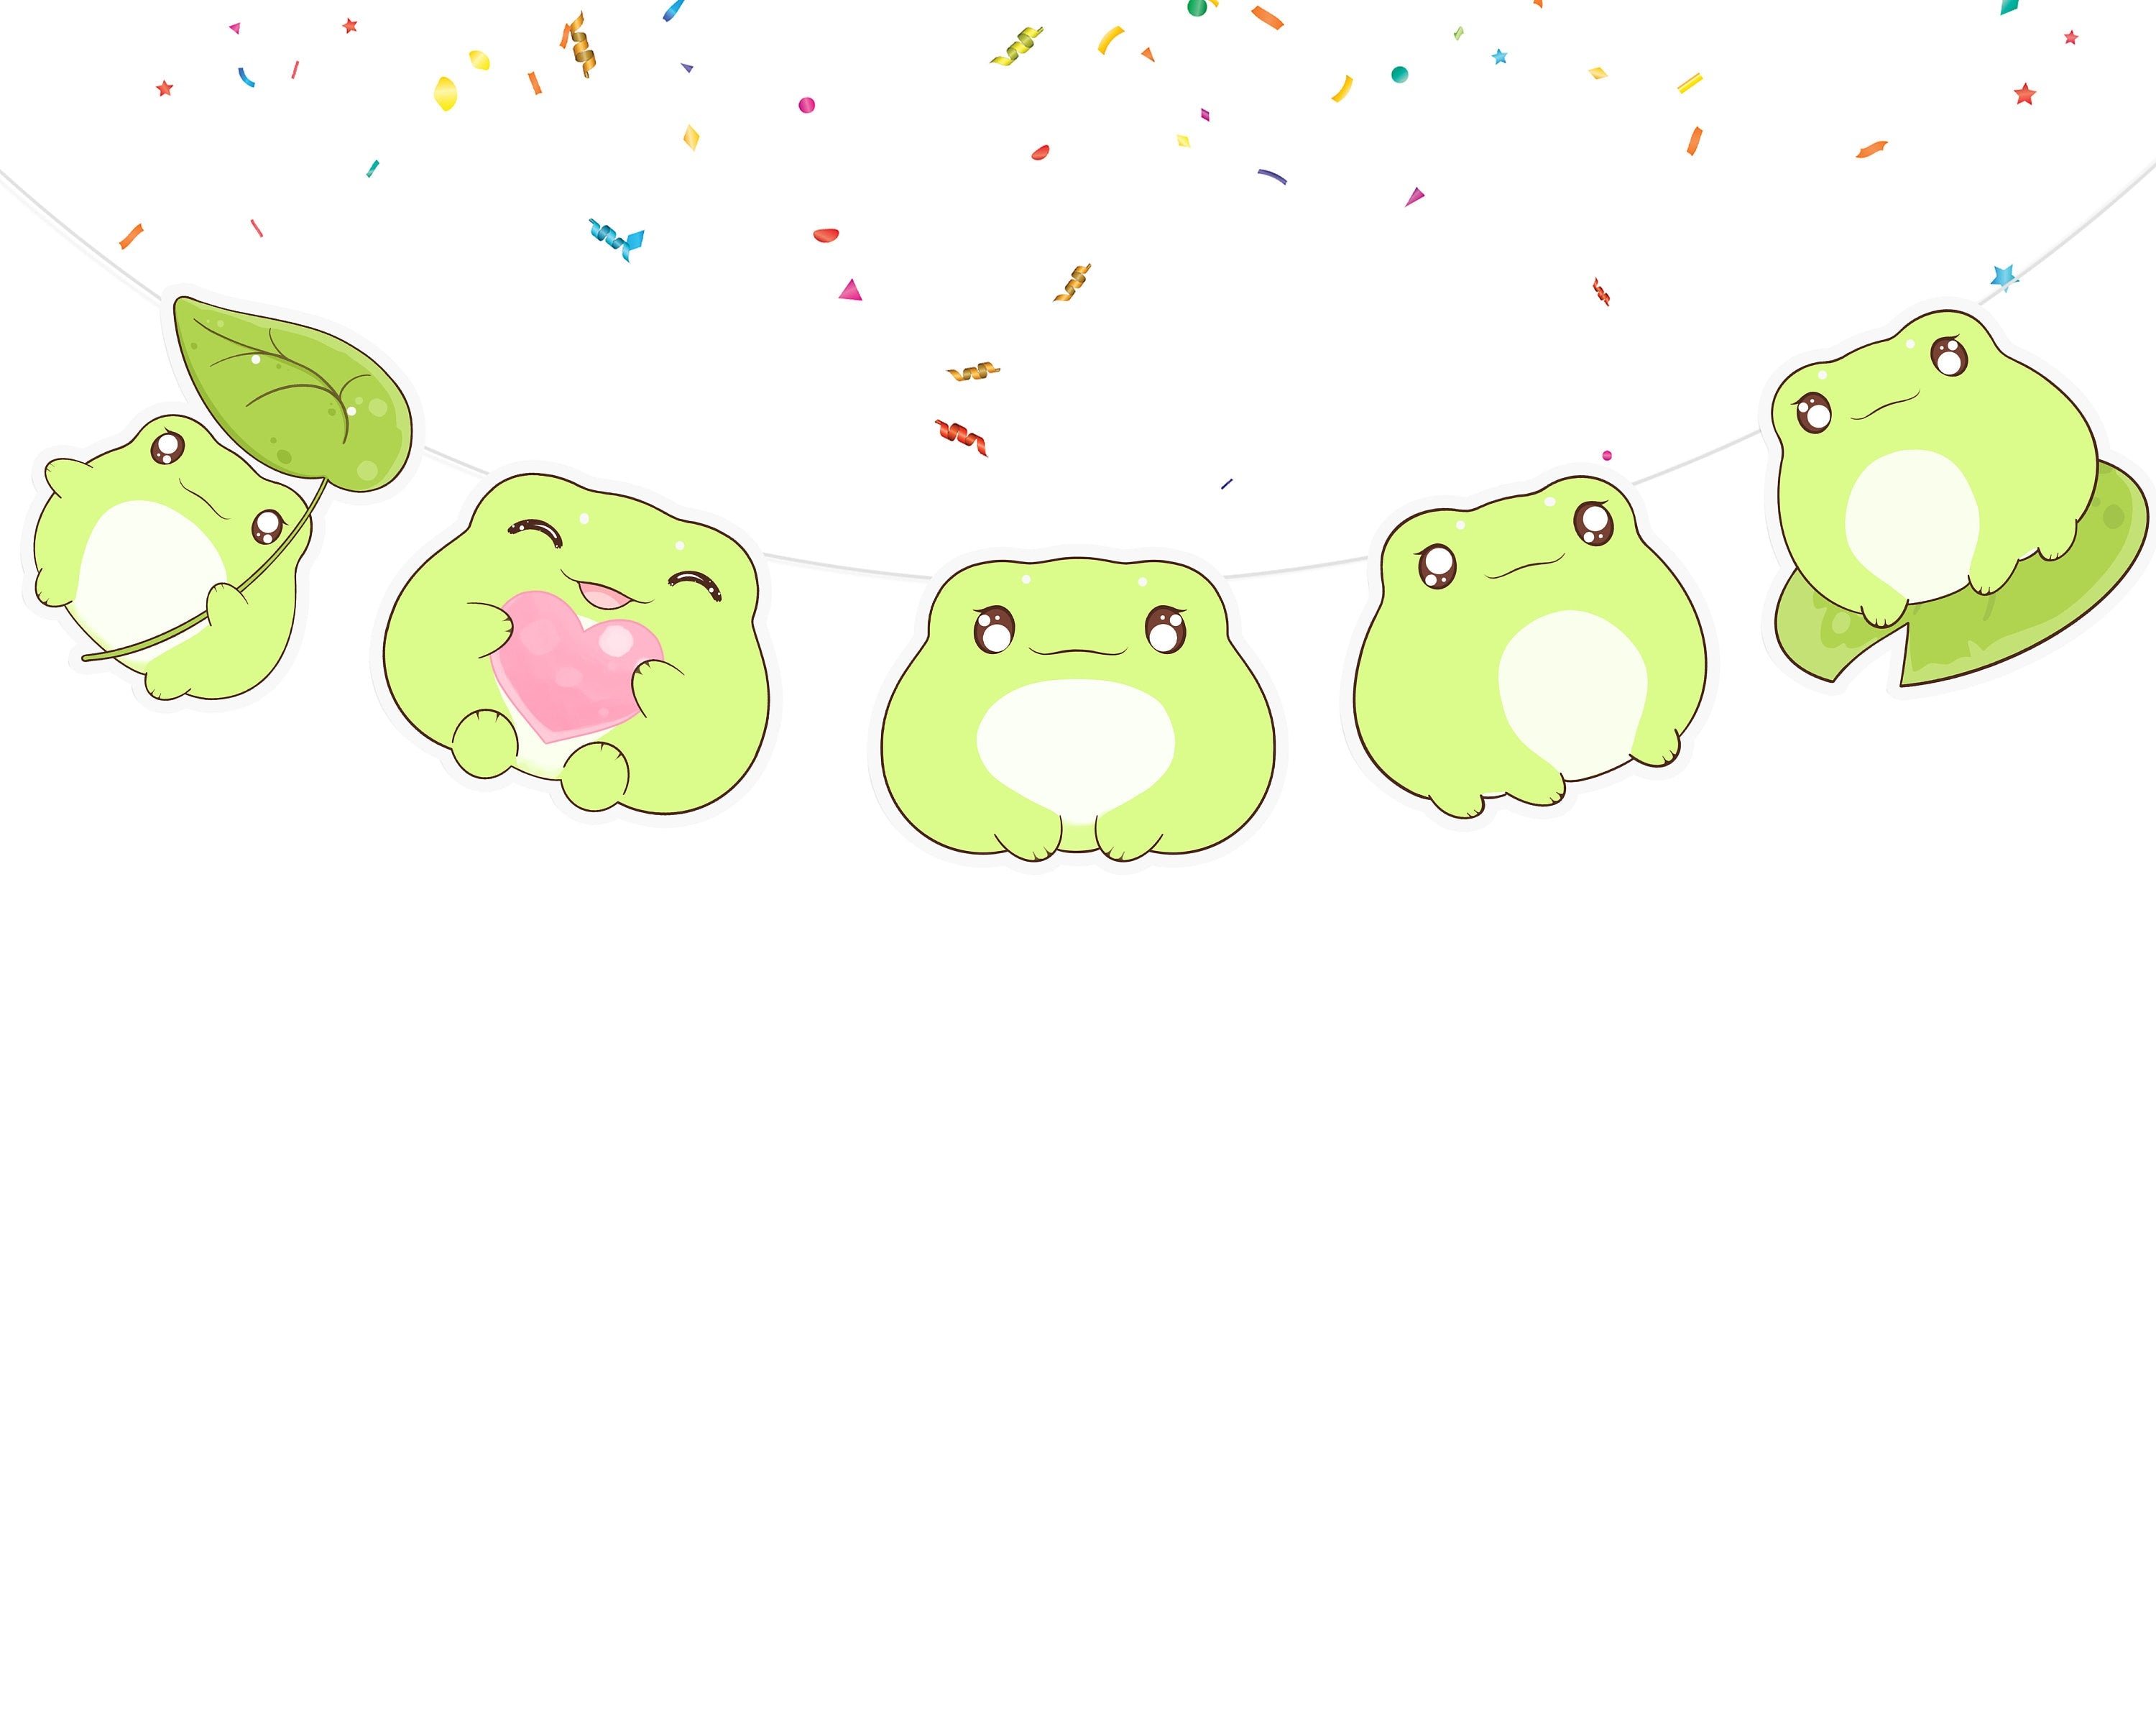 Adorable Kawaii Frog Cartoon Banner for Whimsical Parties and Playful Decor